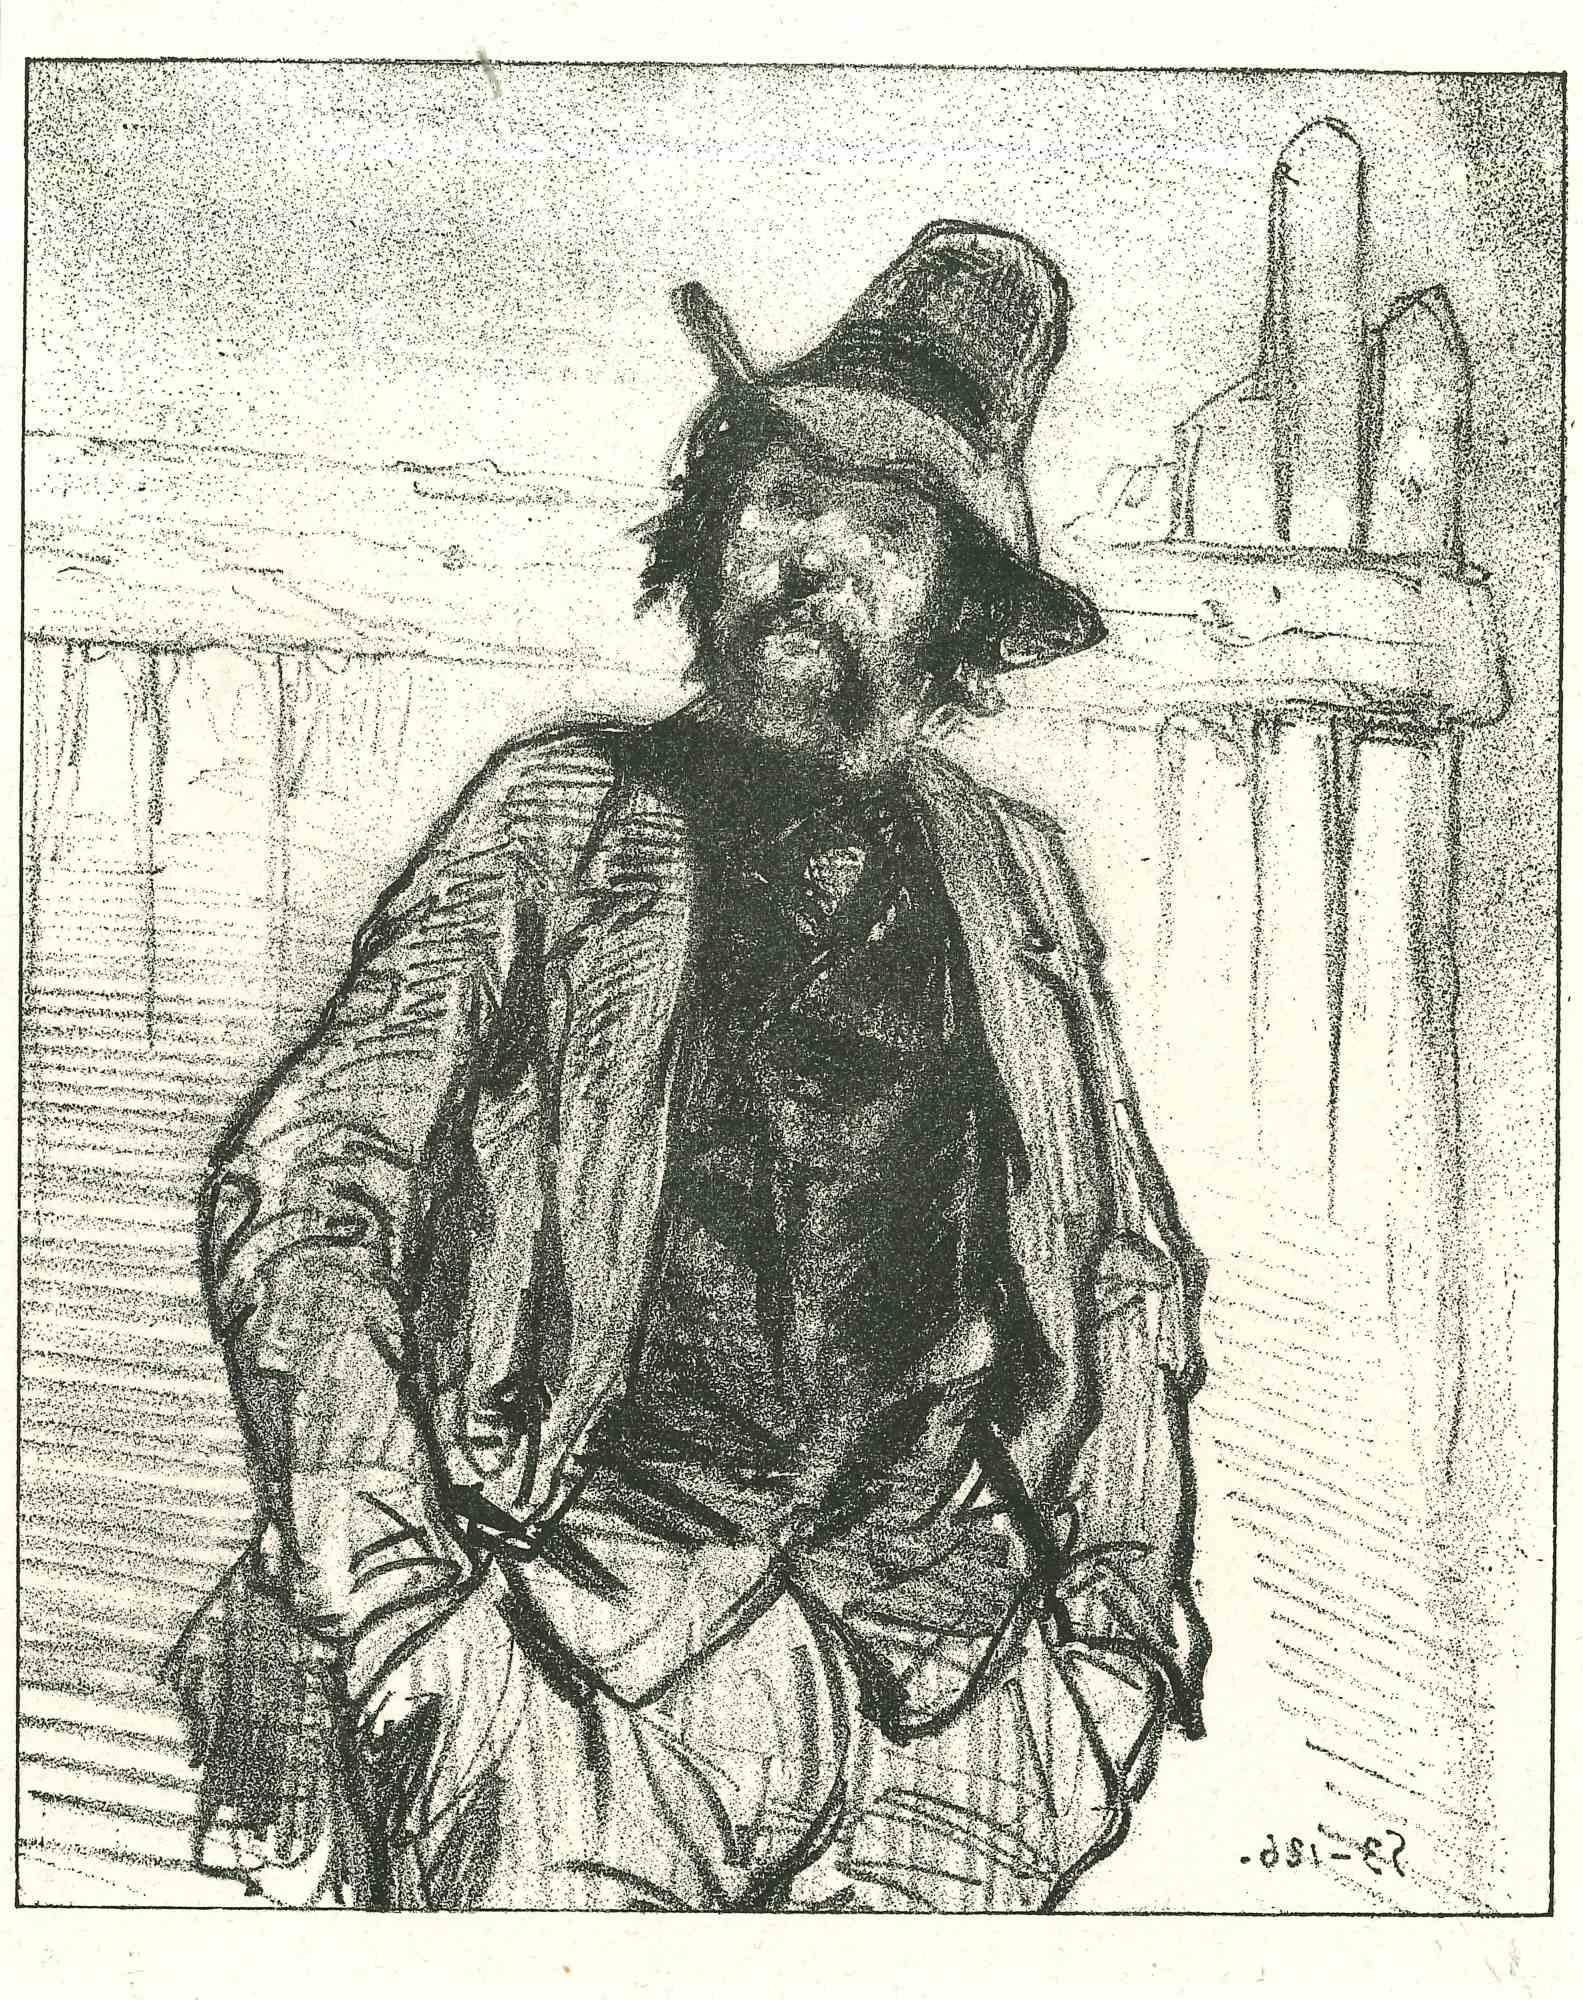 Gallant - Original Lithograph after Paul Gavarni - 1881